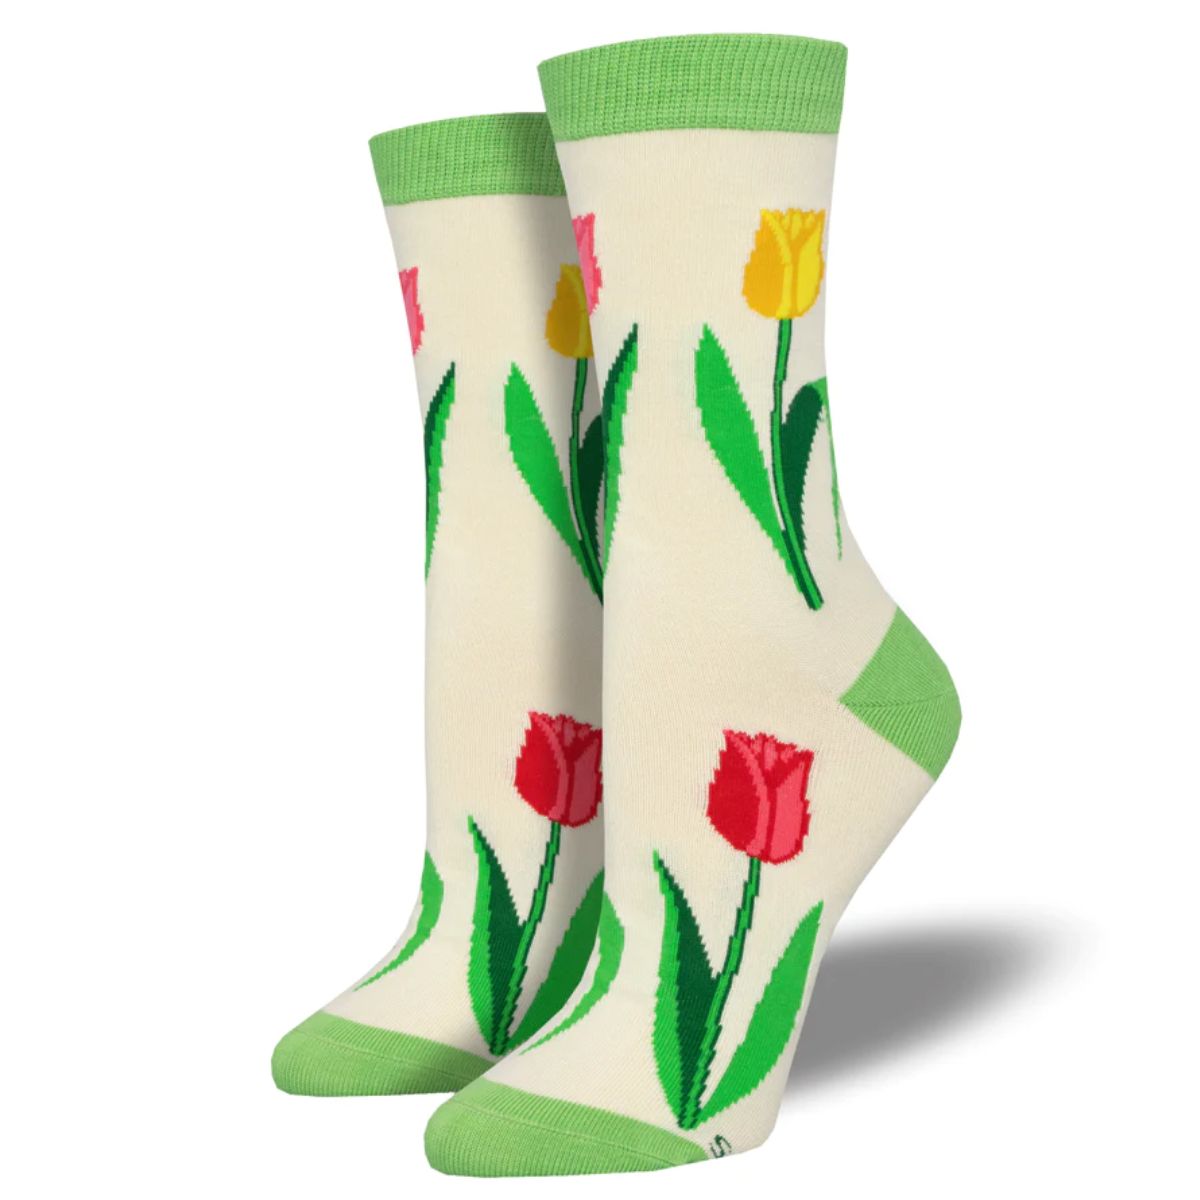 Spring tulip socks a pair of white crew socks with tulip flower print